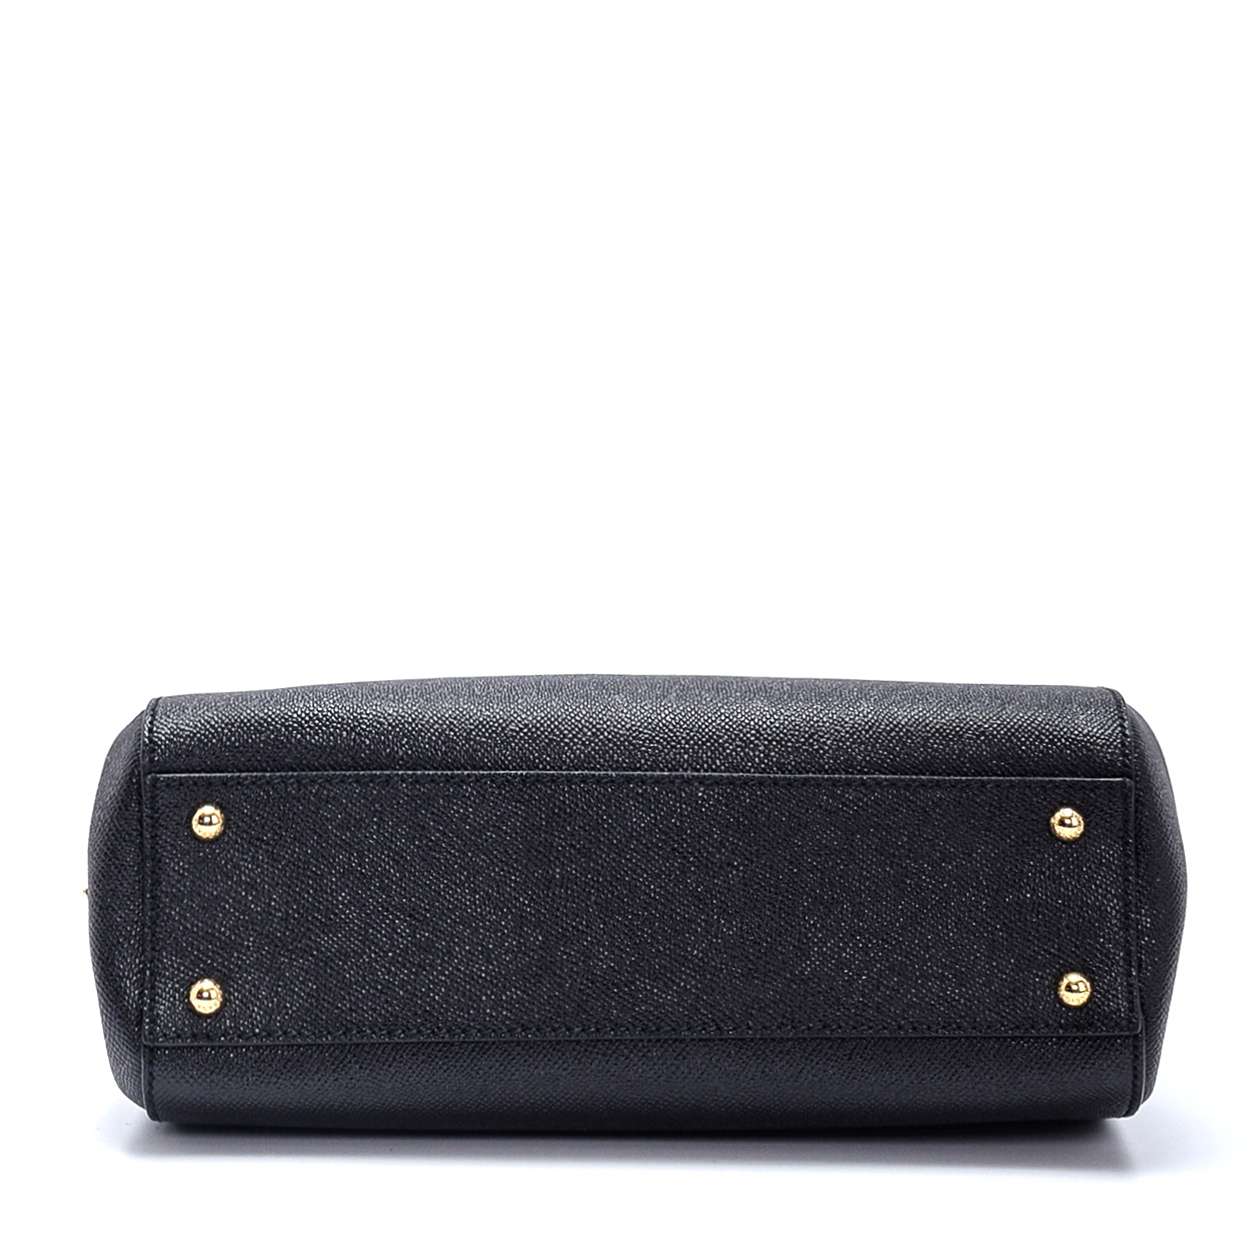 Dolce & Gabbana - Black Granied Leather Sicily Shopping Bag